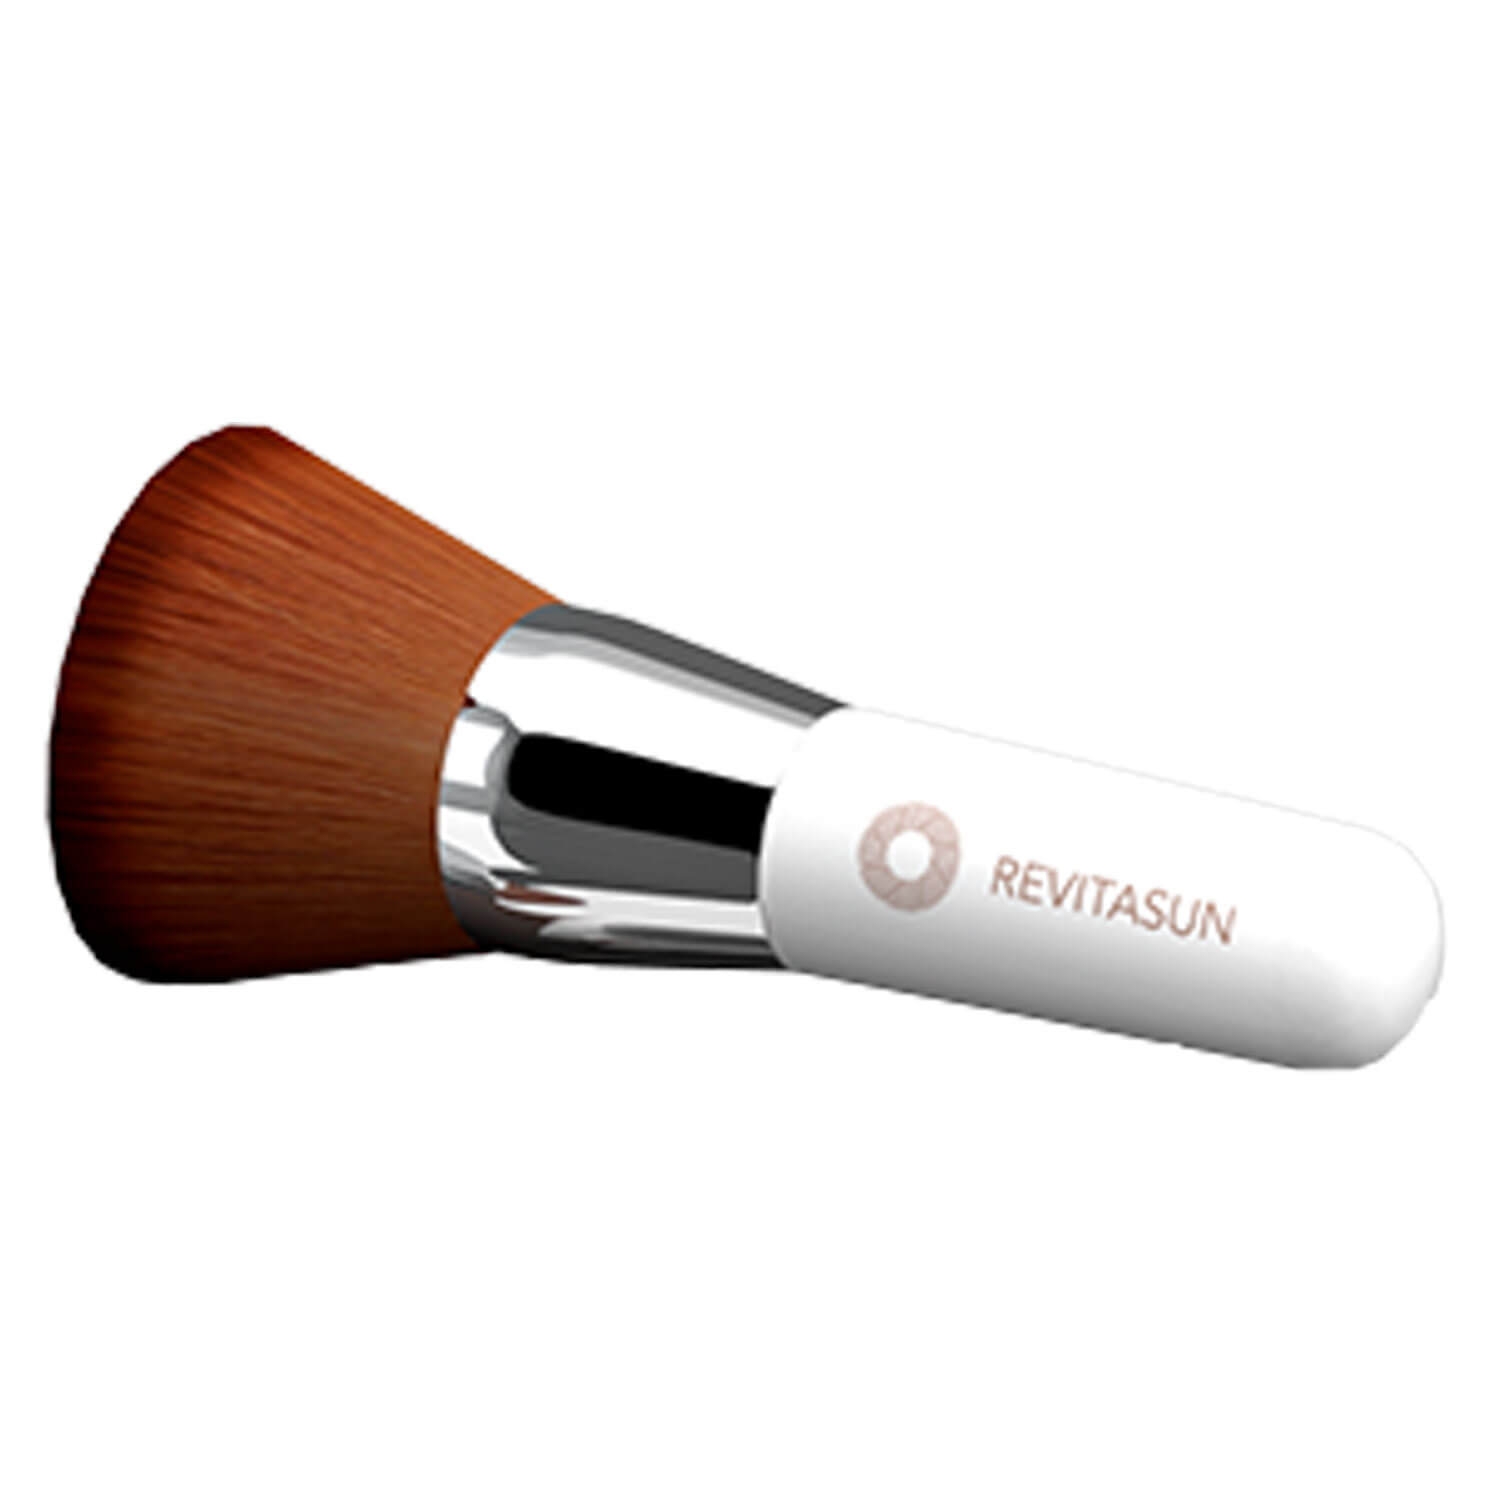 Produktbild von REVITASUN - Flat Kabuki Brush